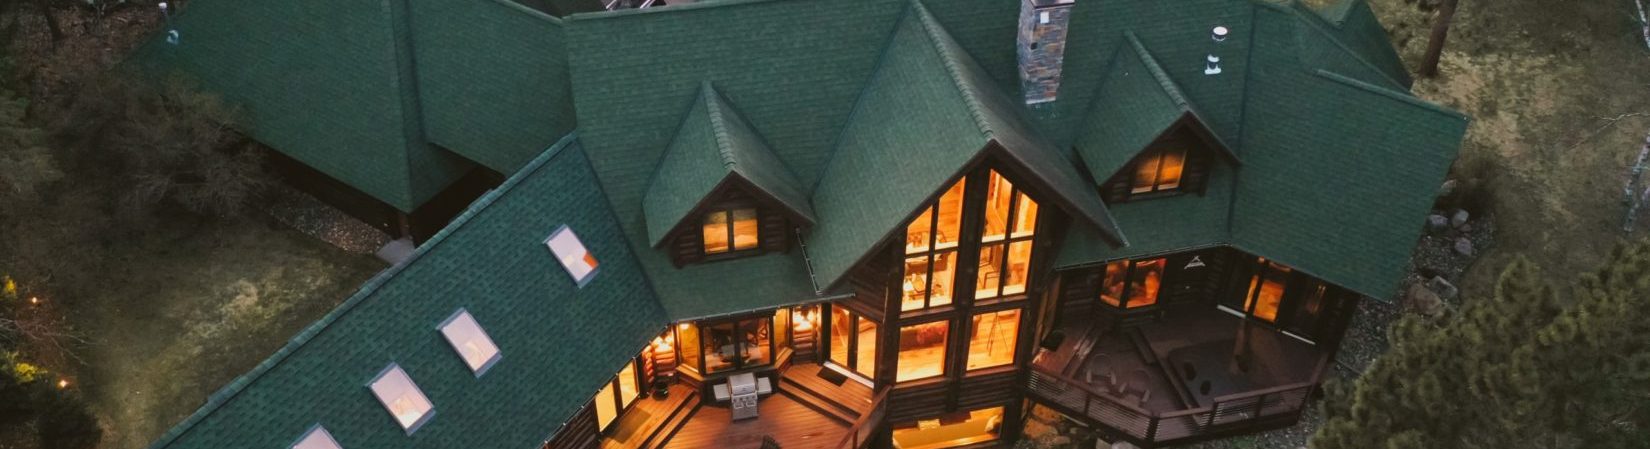 Minnesota home with roof and skylights